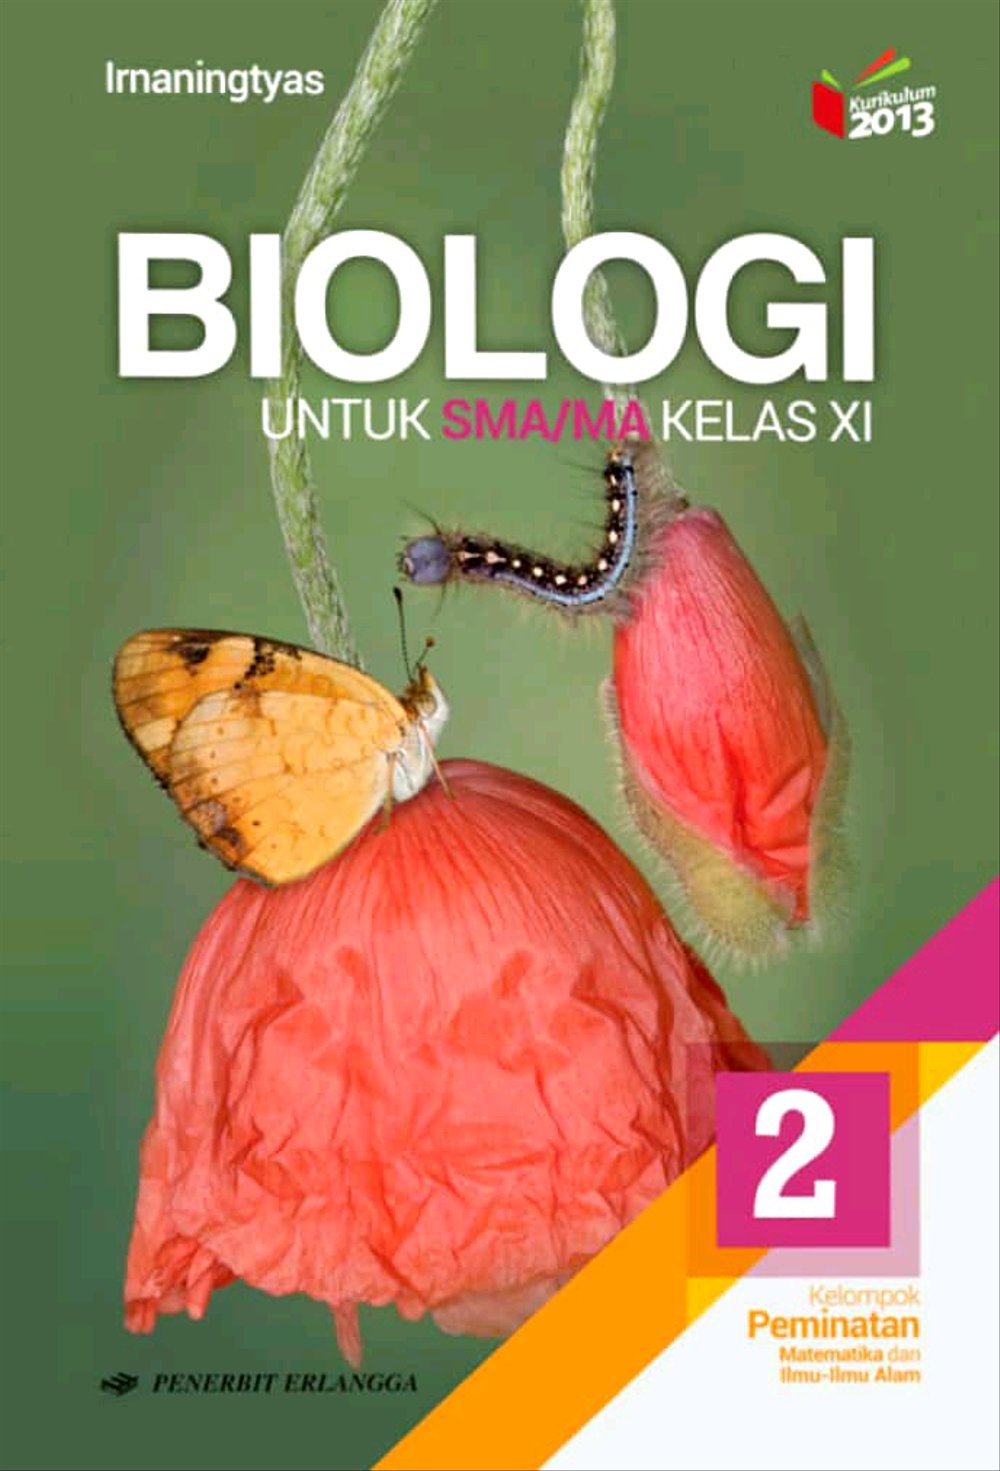 Download buku biologi kelas xi irnaningtyas pdf